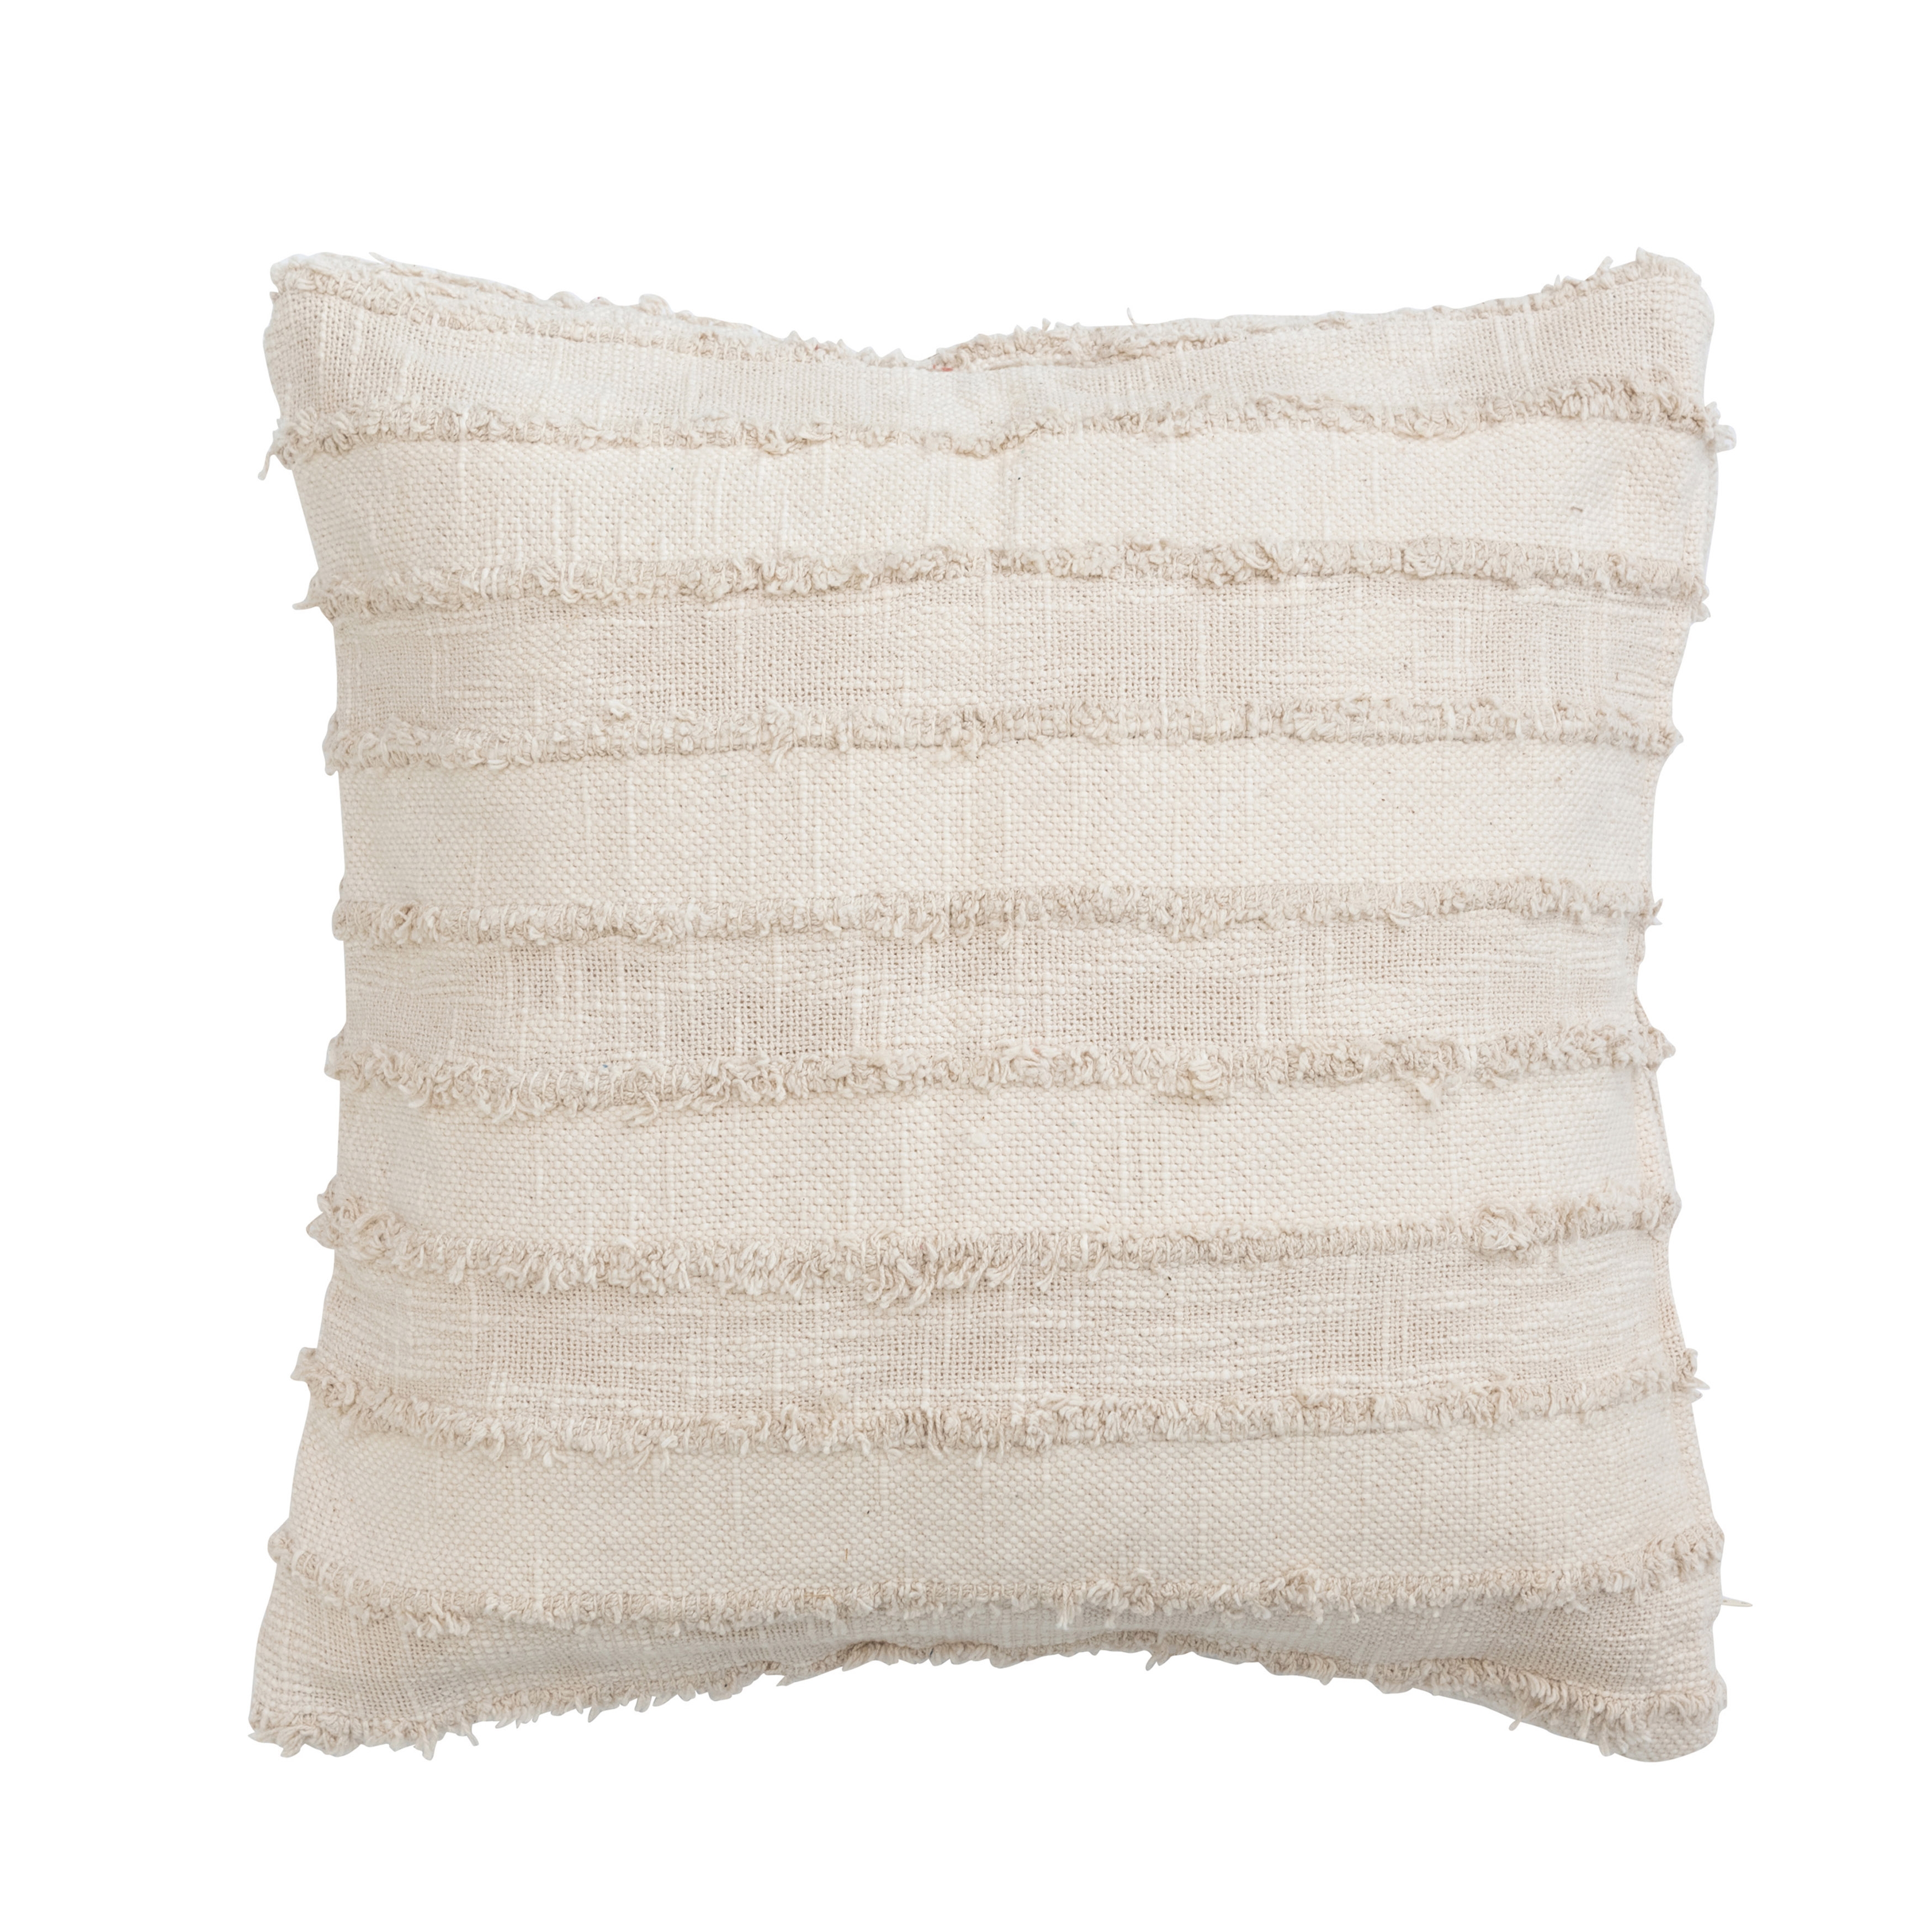  Woven Cotton Striped Pillow, Beige - Image 0